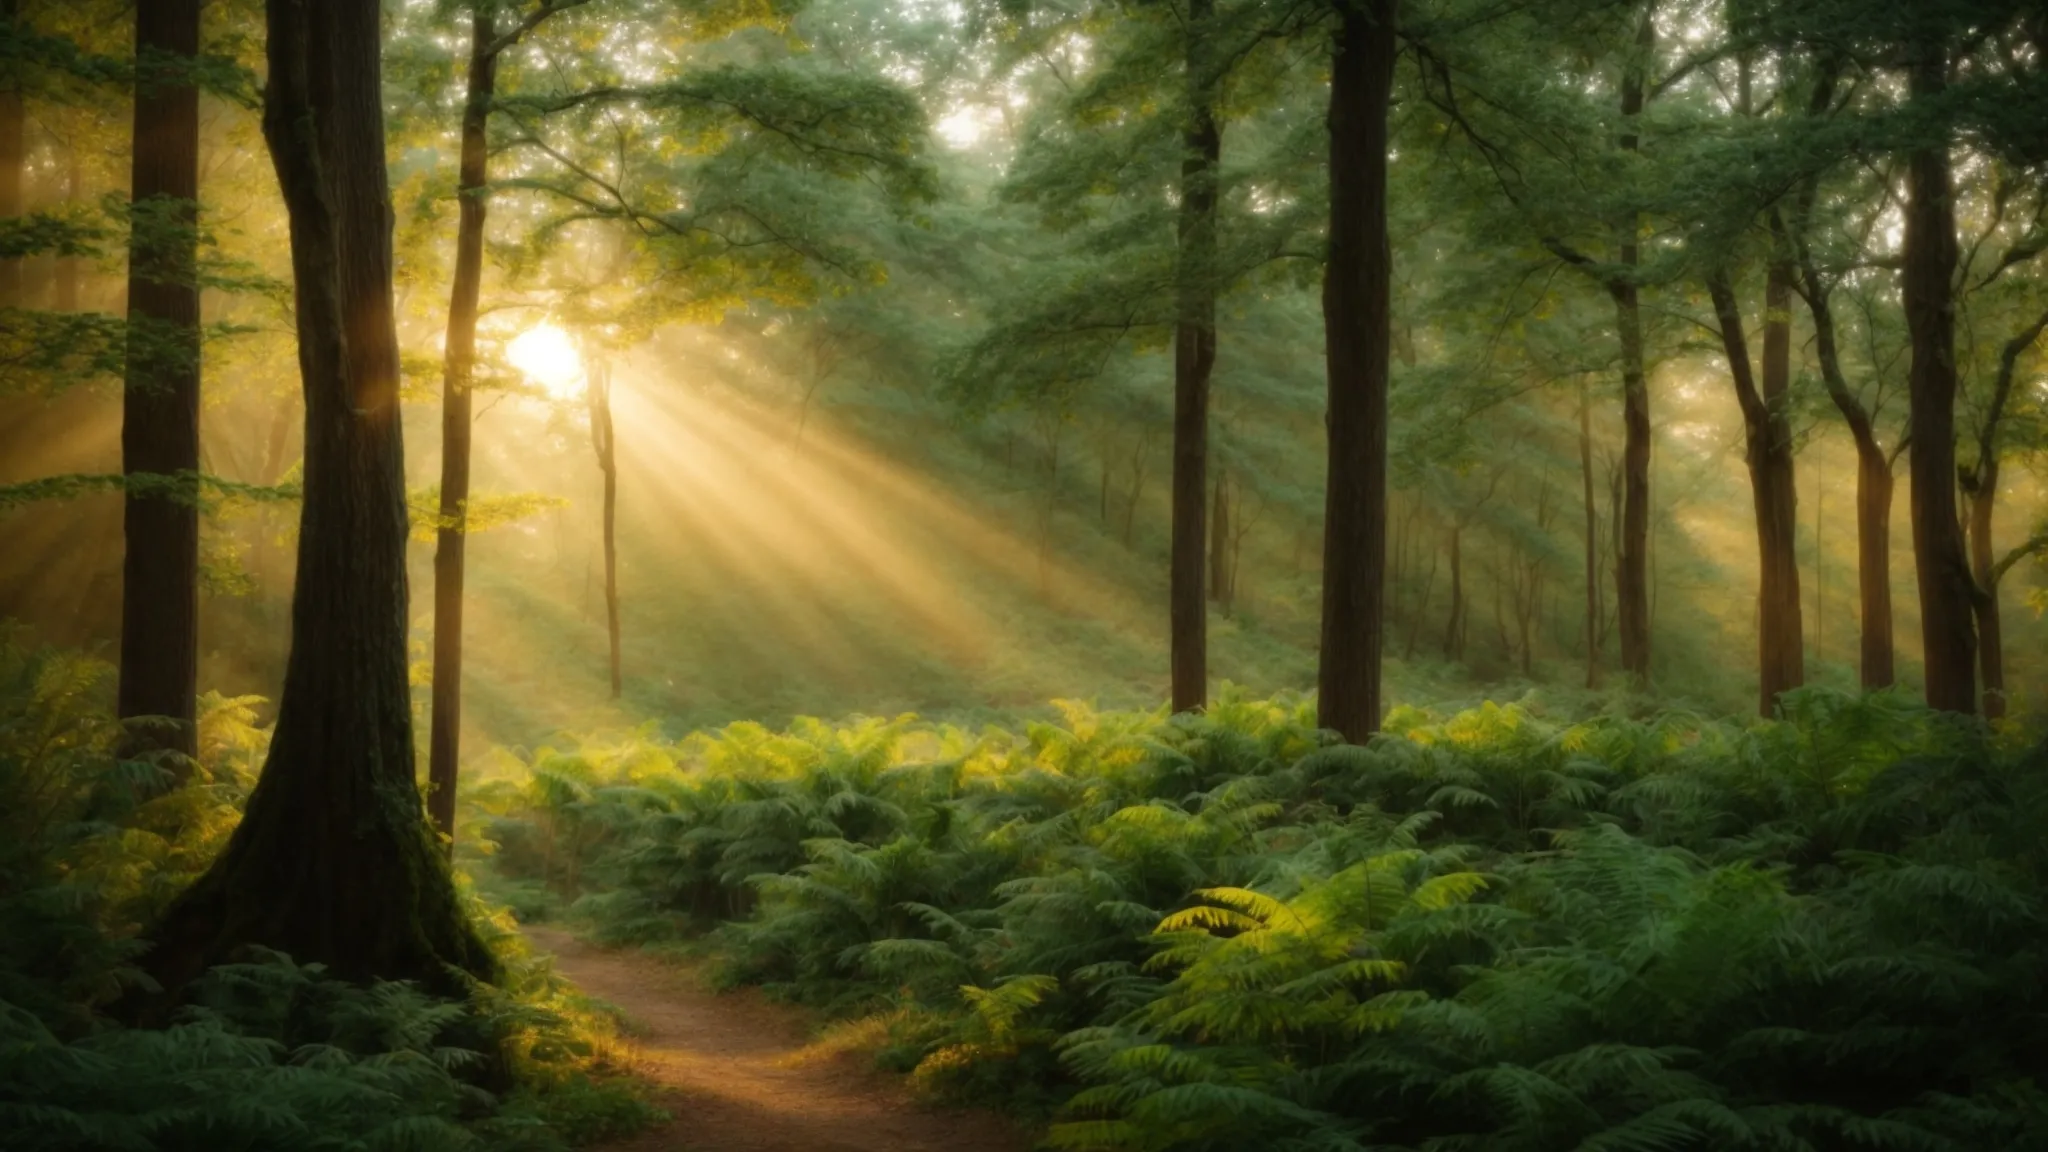 a sunrise over a verdant forest, symbolizing a new era of eco-friendly marketing.